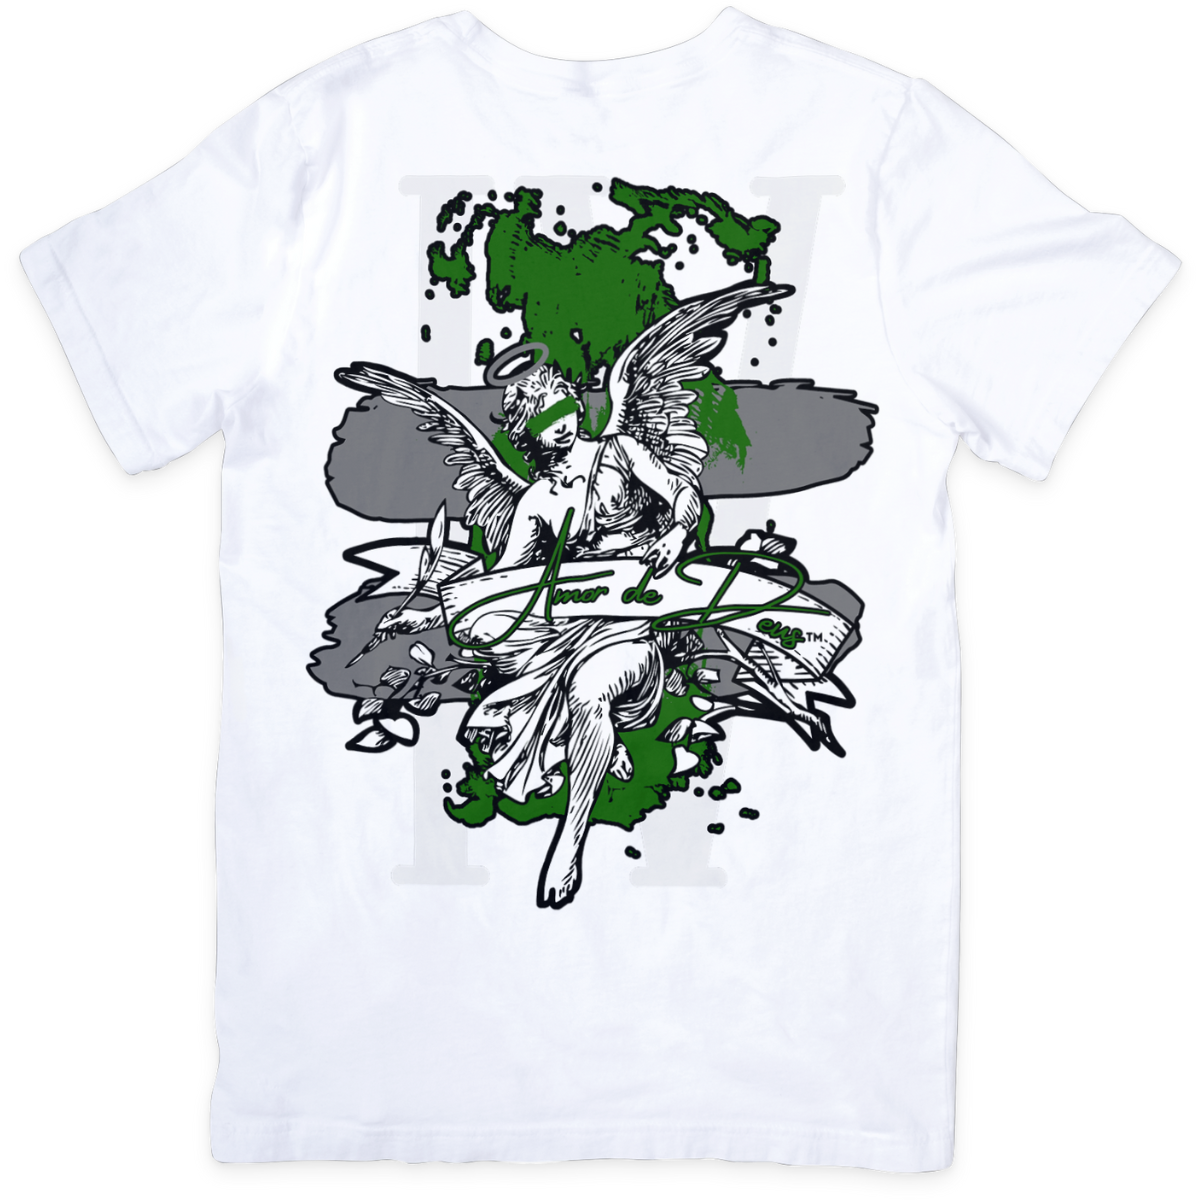 IV THE LOVE OF GOD T-Shirt - GREEN/GRAY